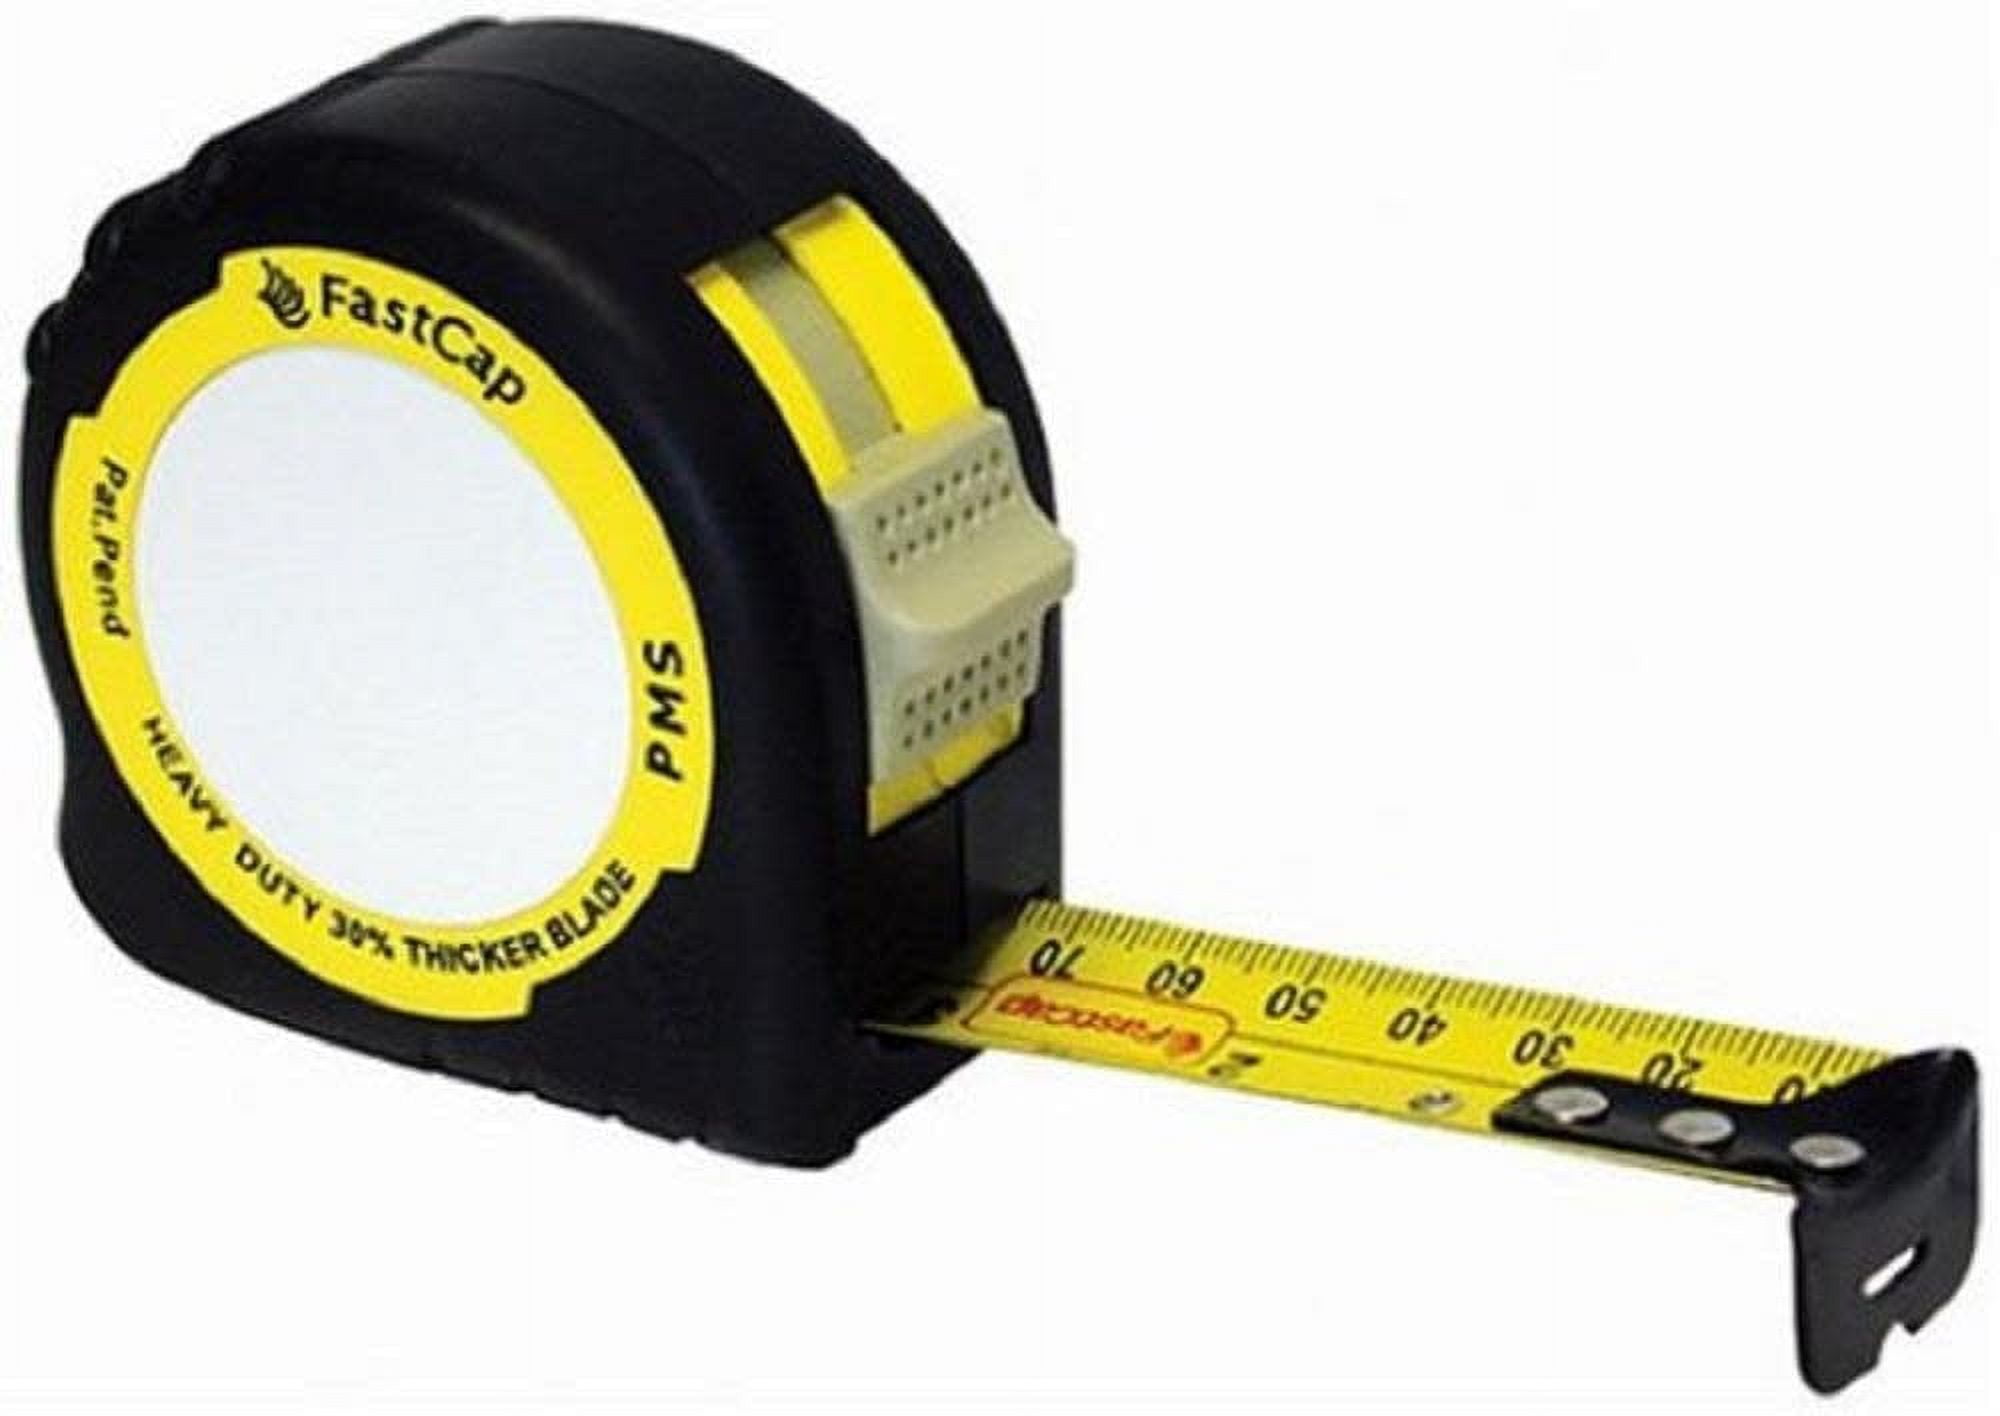 Fastcap Tape Measure,1 In x 16 ft,Black/Yellow PMS-16 